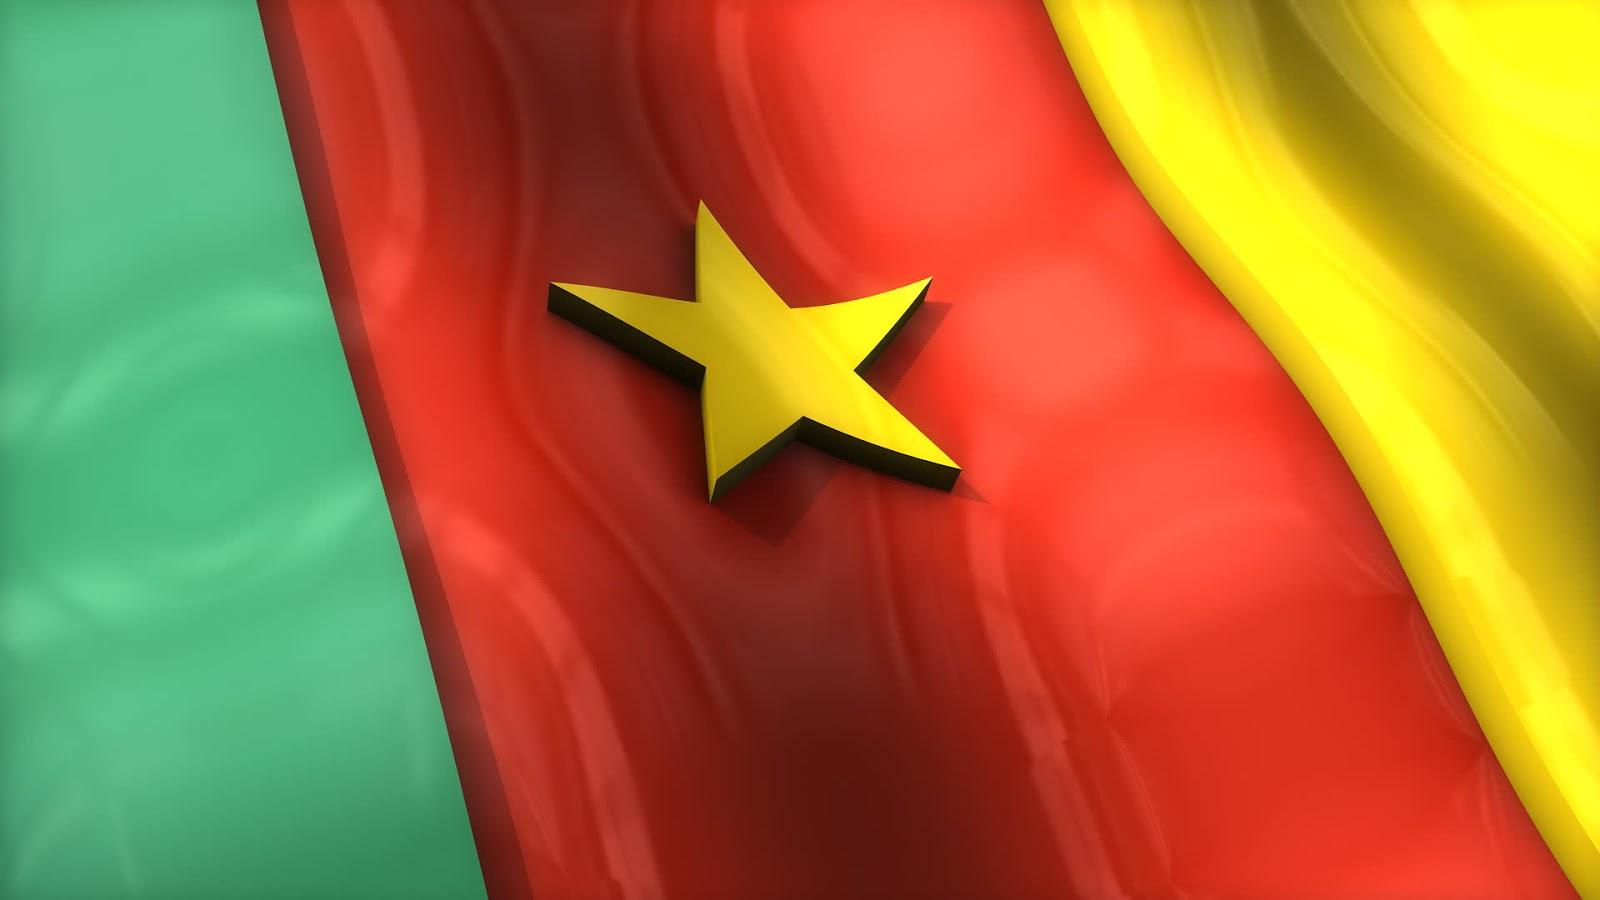 Imagehub: Cameroon Flag HD Free Download